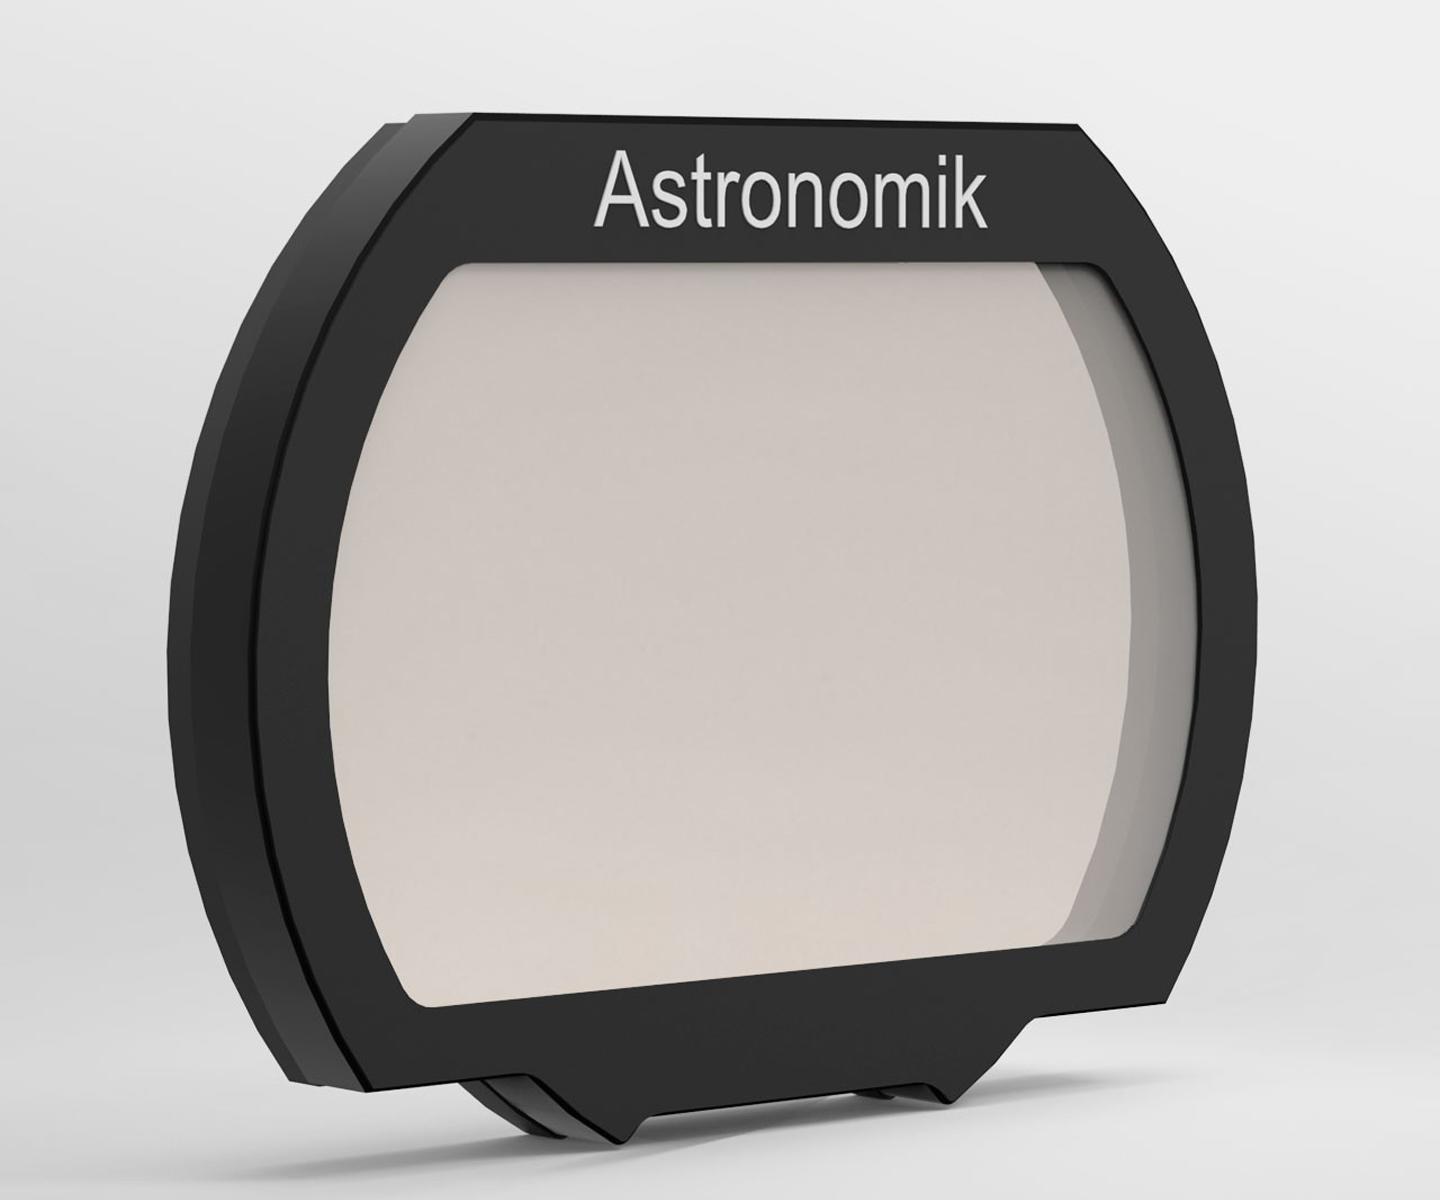   Astronomik Clip Filter per Sony Alpha,  ProPlanet 742 IR Pass Filter, filtro planetario  